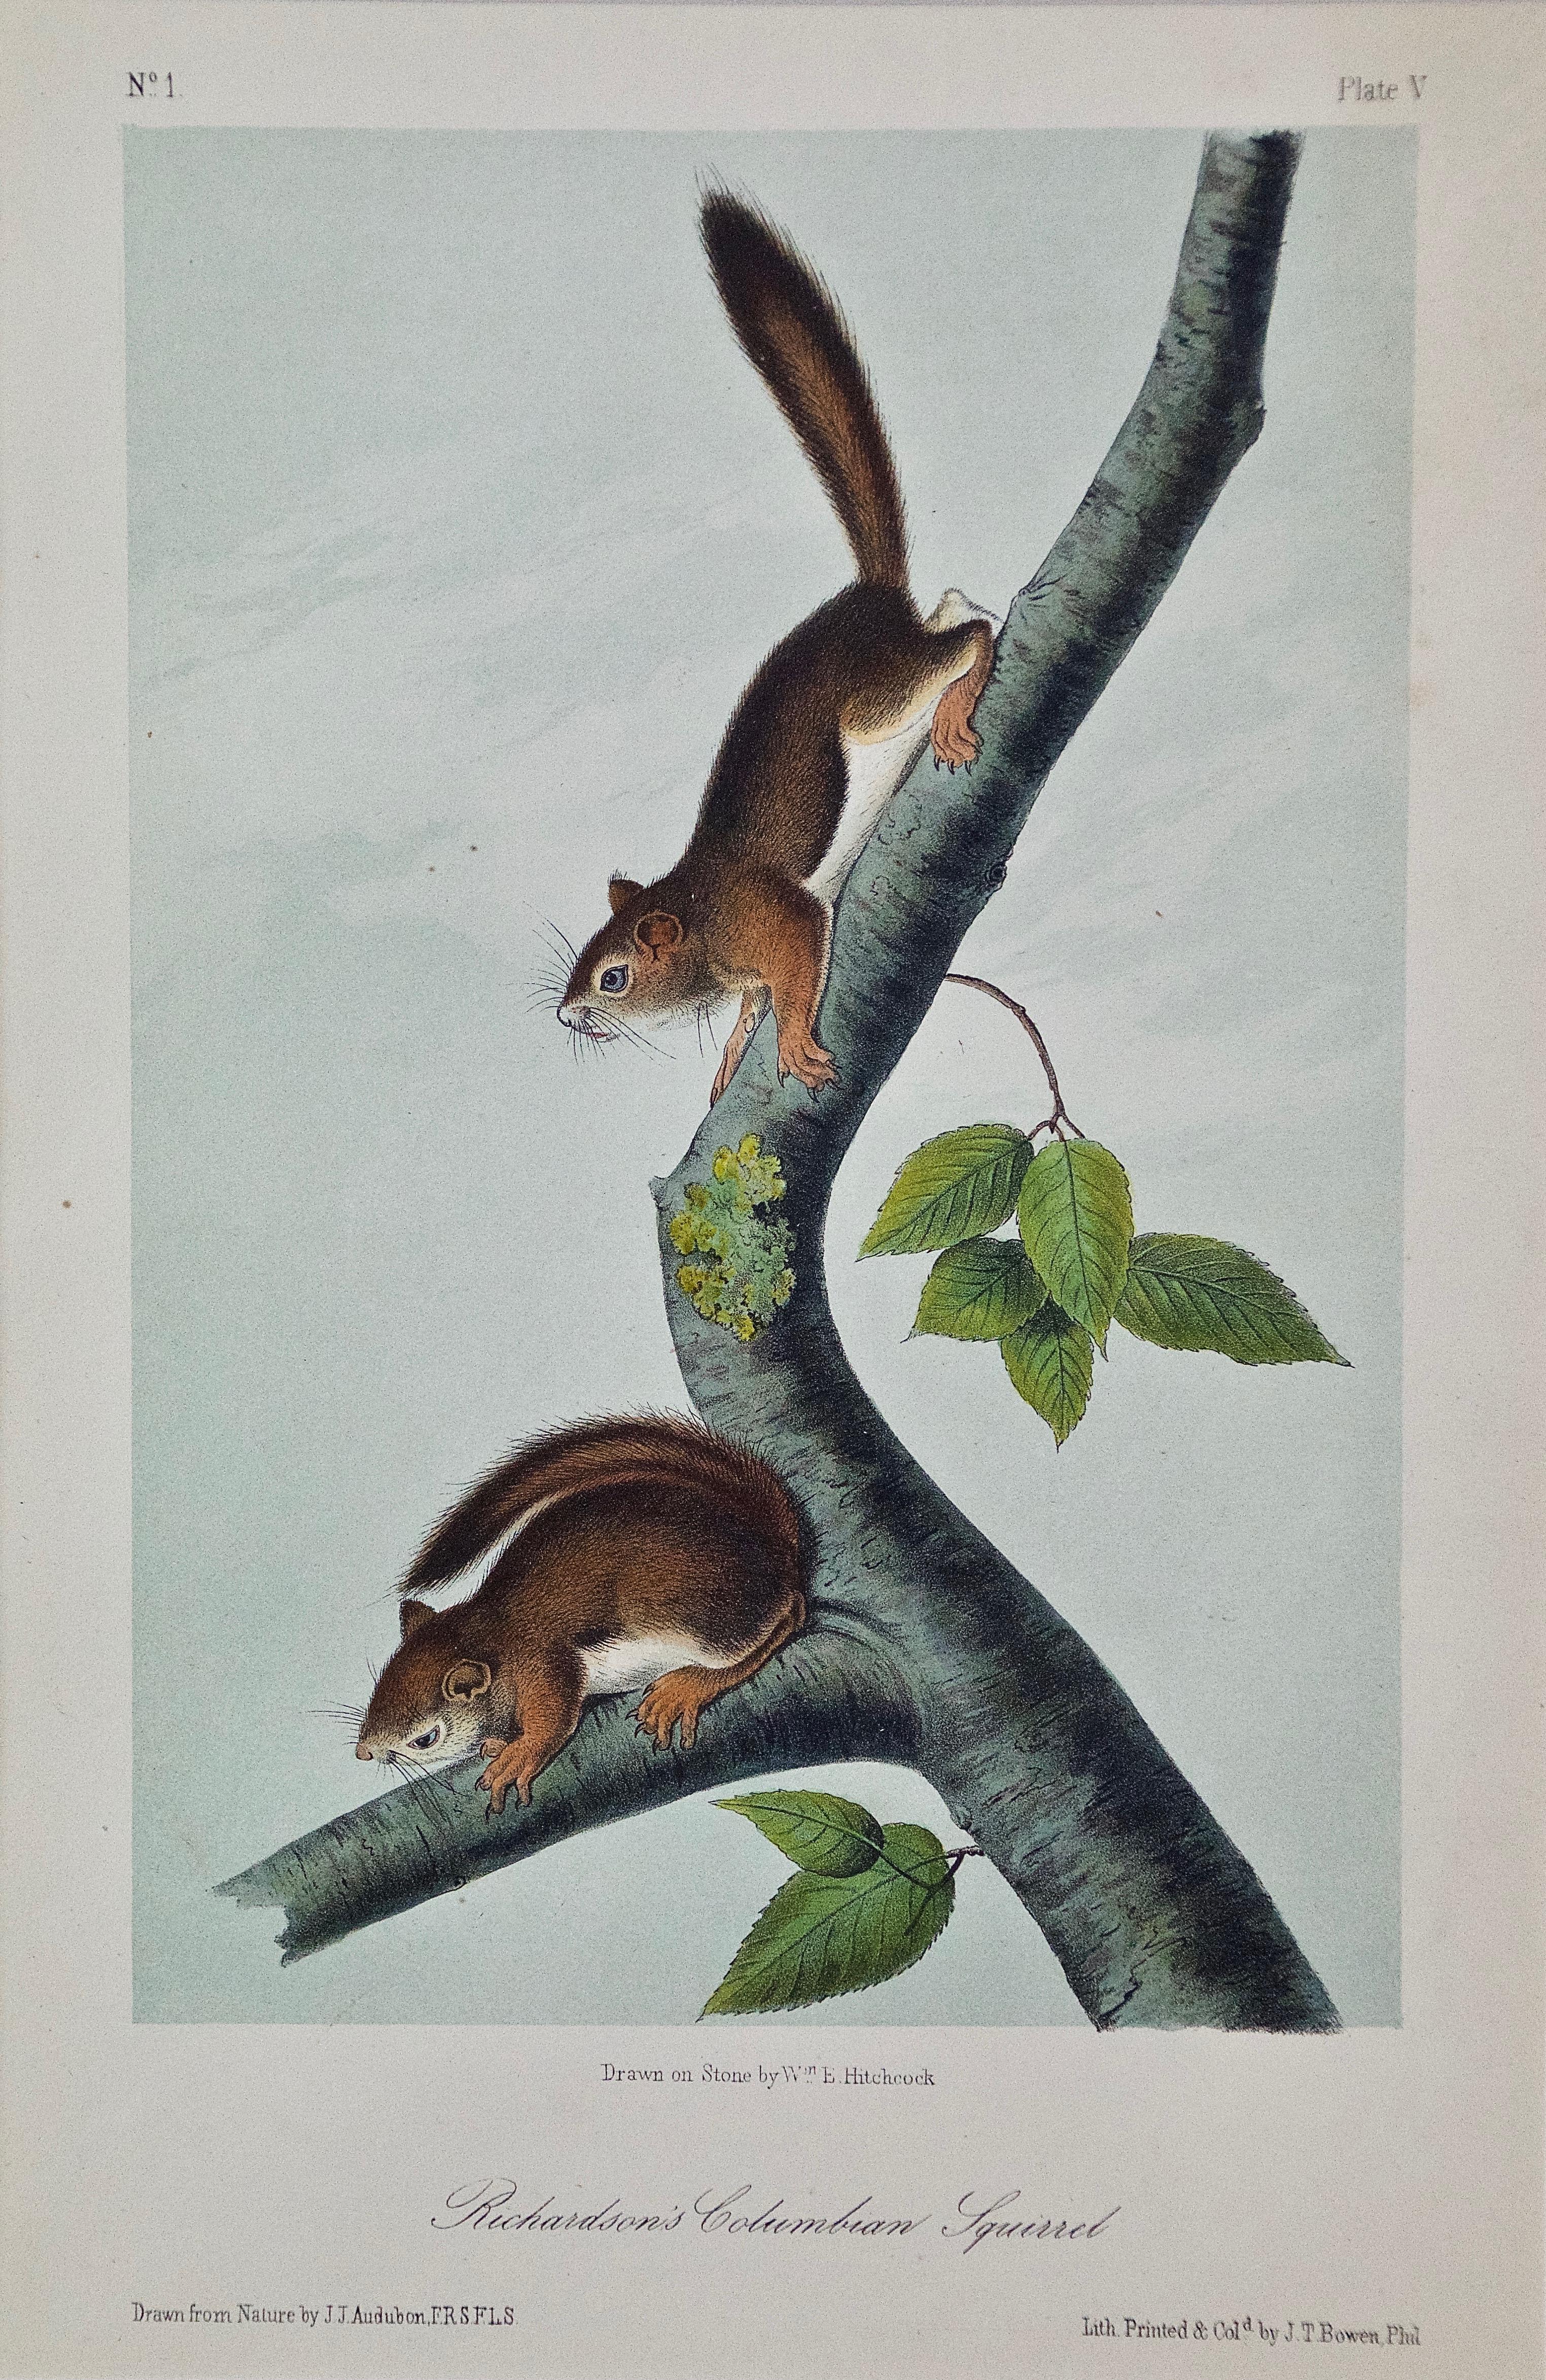 John James Audubon Animal Print – Handkolorierte Lithographie eines „Richardson's Columbian Squirrel“ von Audubon